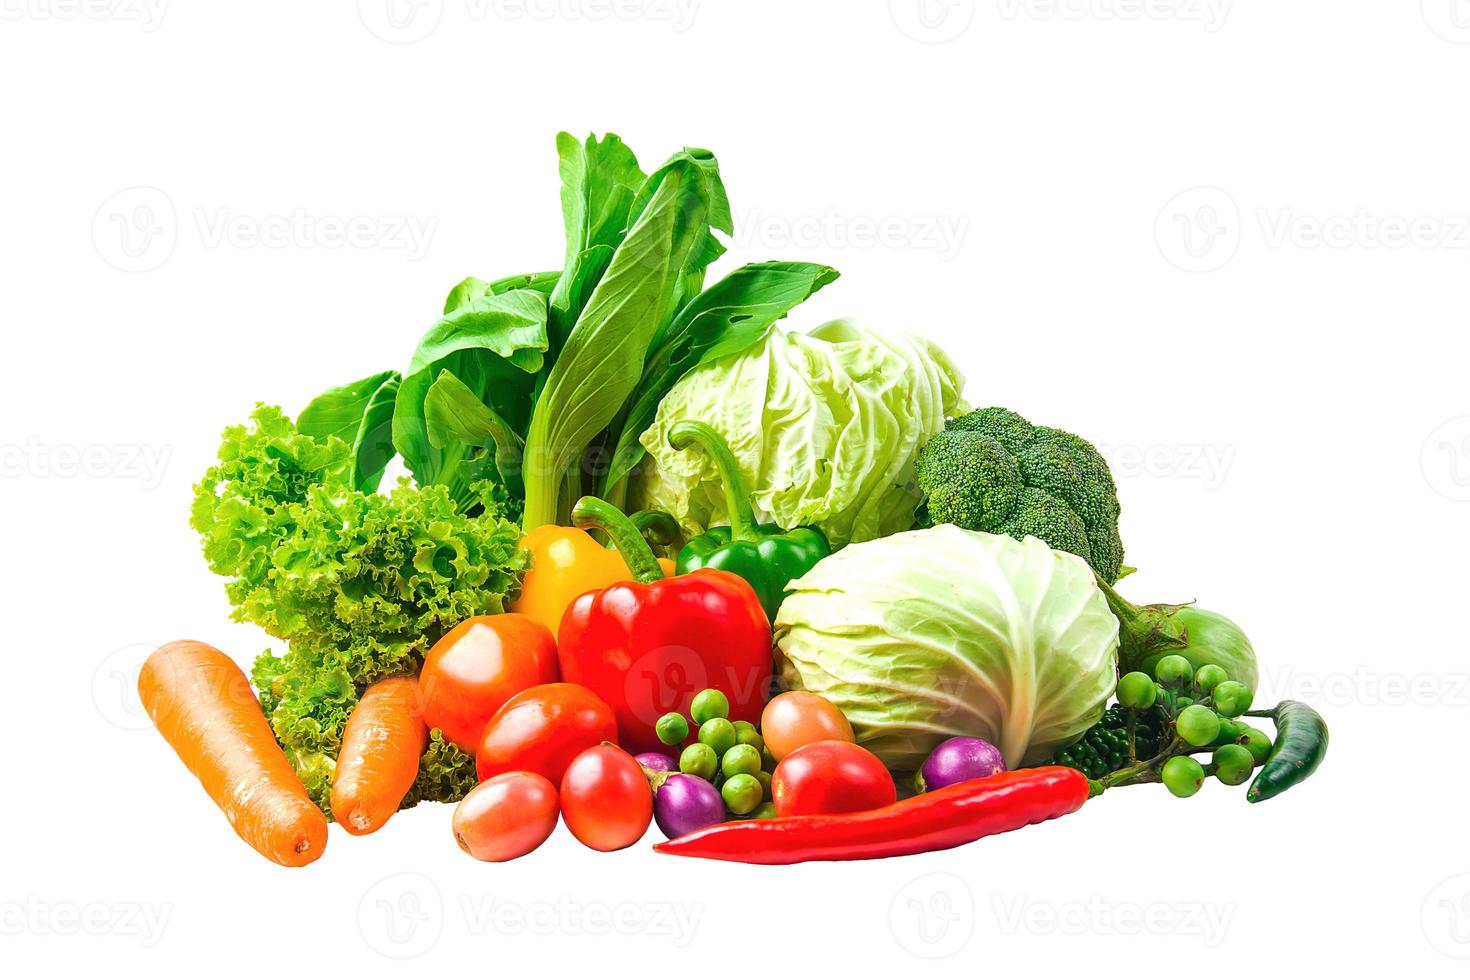 samling grönsaker isolerade vit bakgrund urklippsbana foto